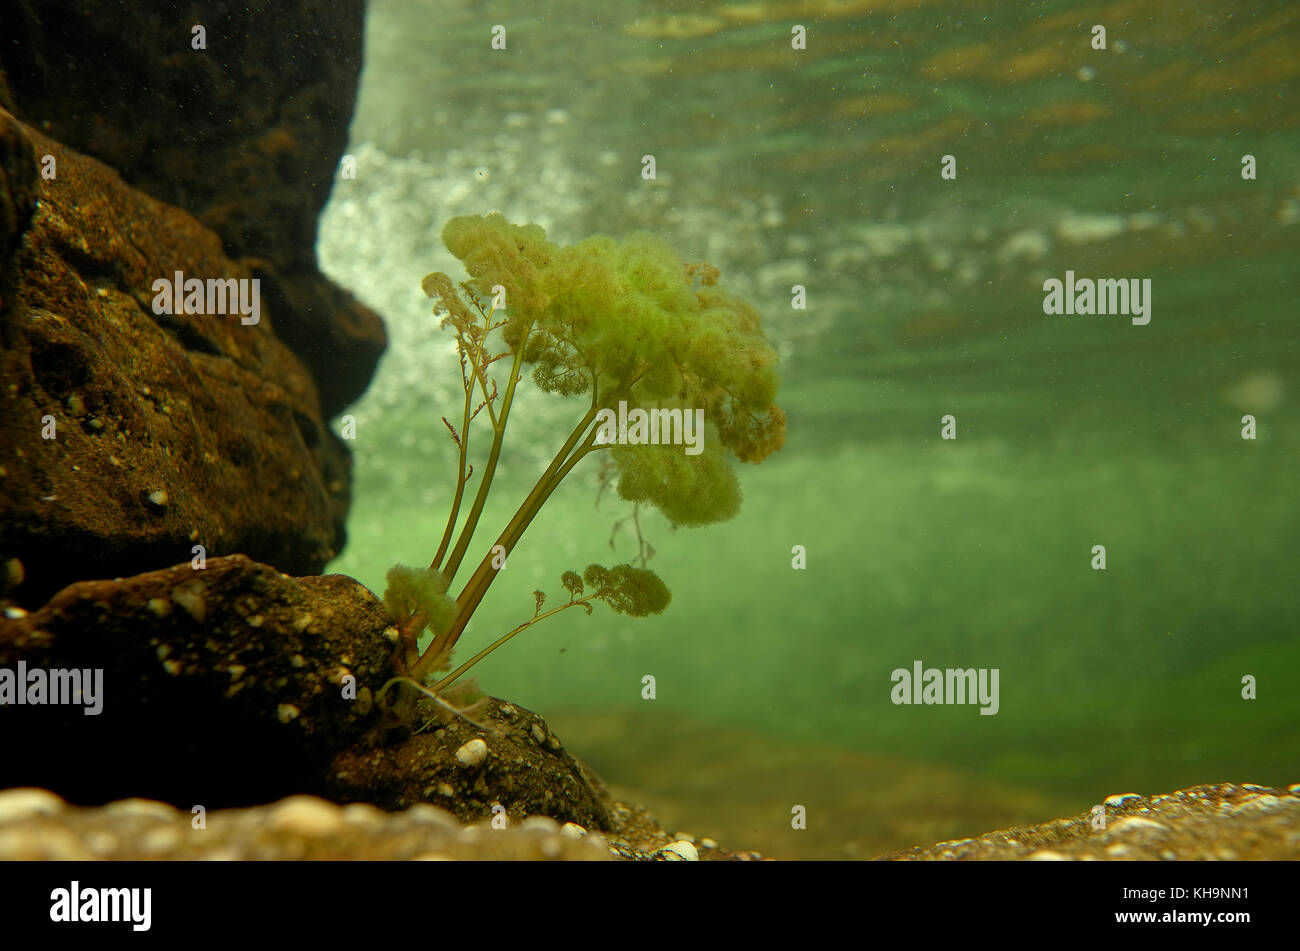 Landscape in miniature  - Rhyncholacis clavigera seen underwater Stock Photo